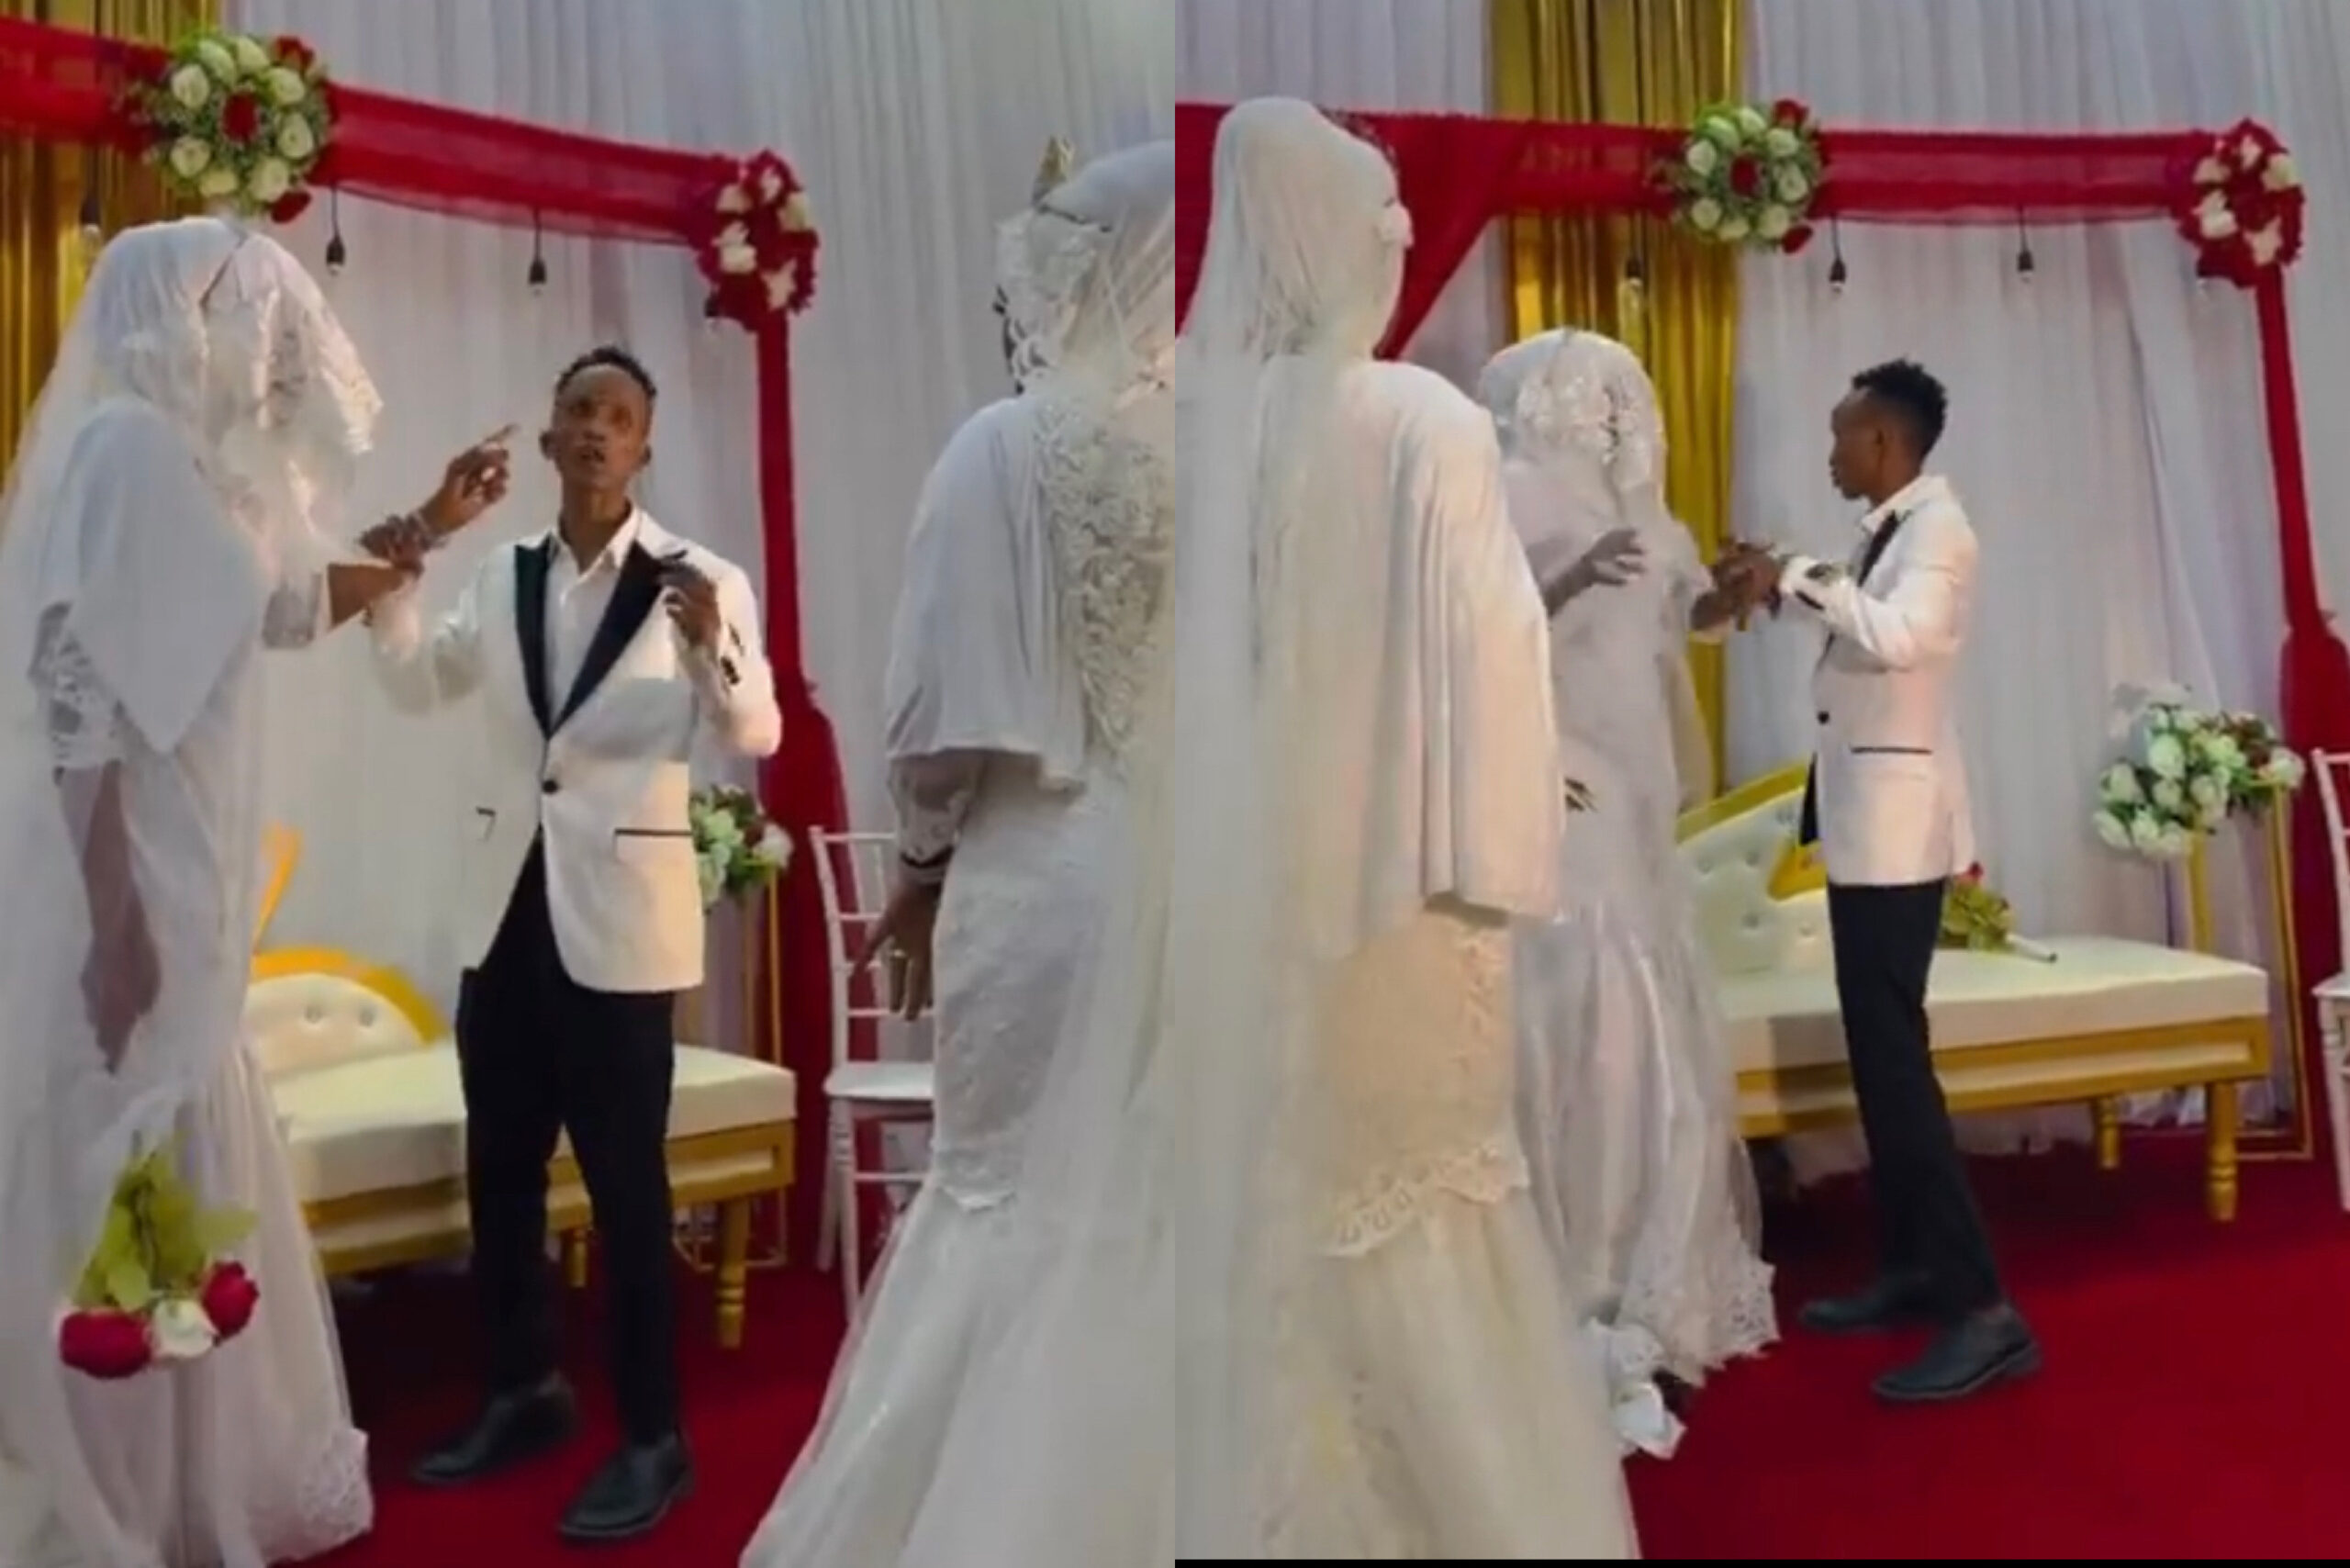 Sister of bride beats groom in Somalia